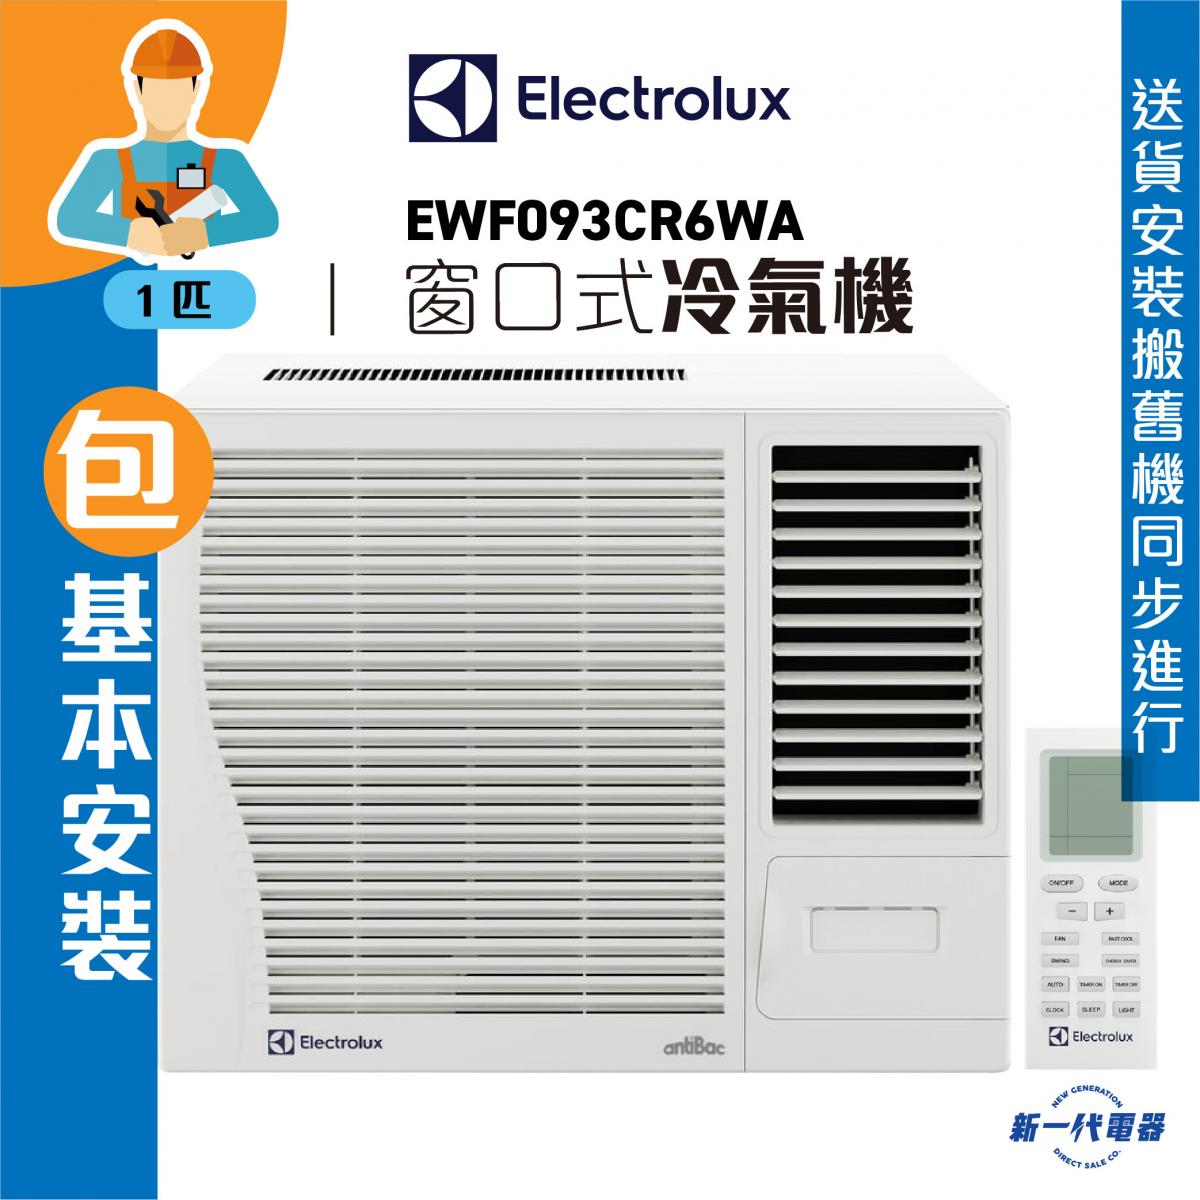 EWF093CR6WA  (Basic installation) -1HP Window Type Air-Conditioner (Remote Control)